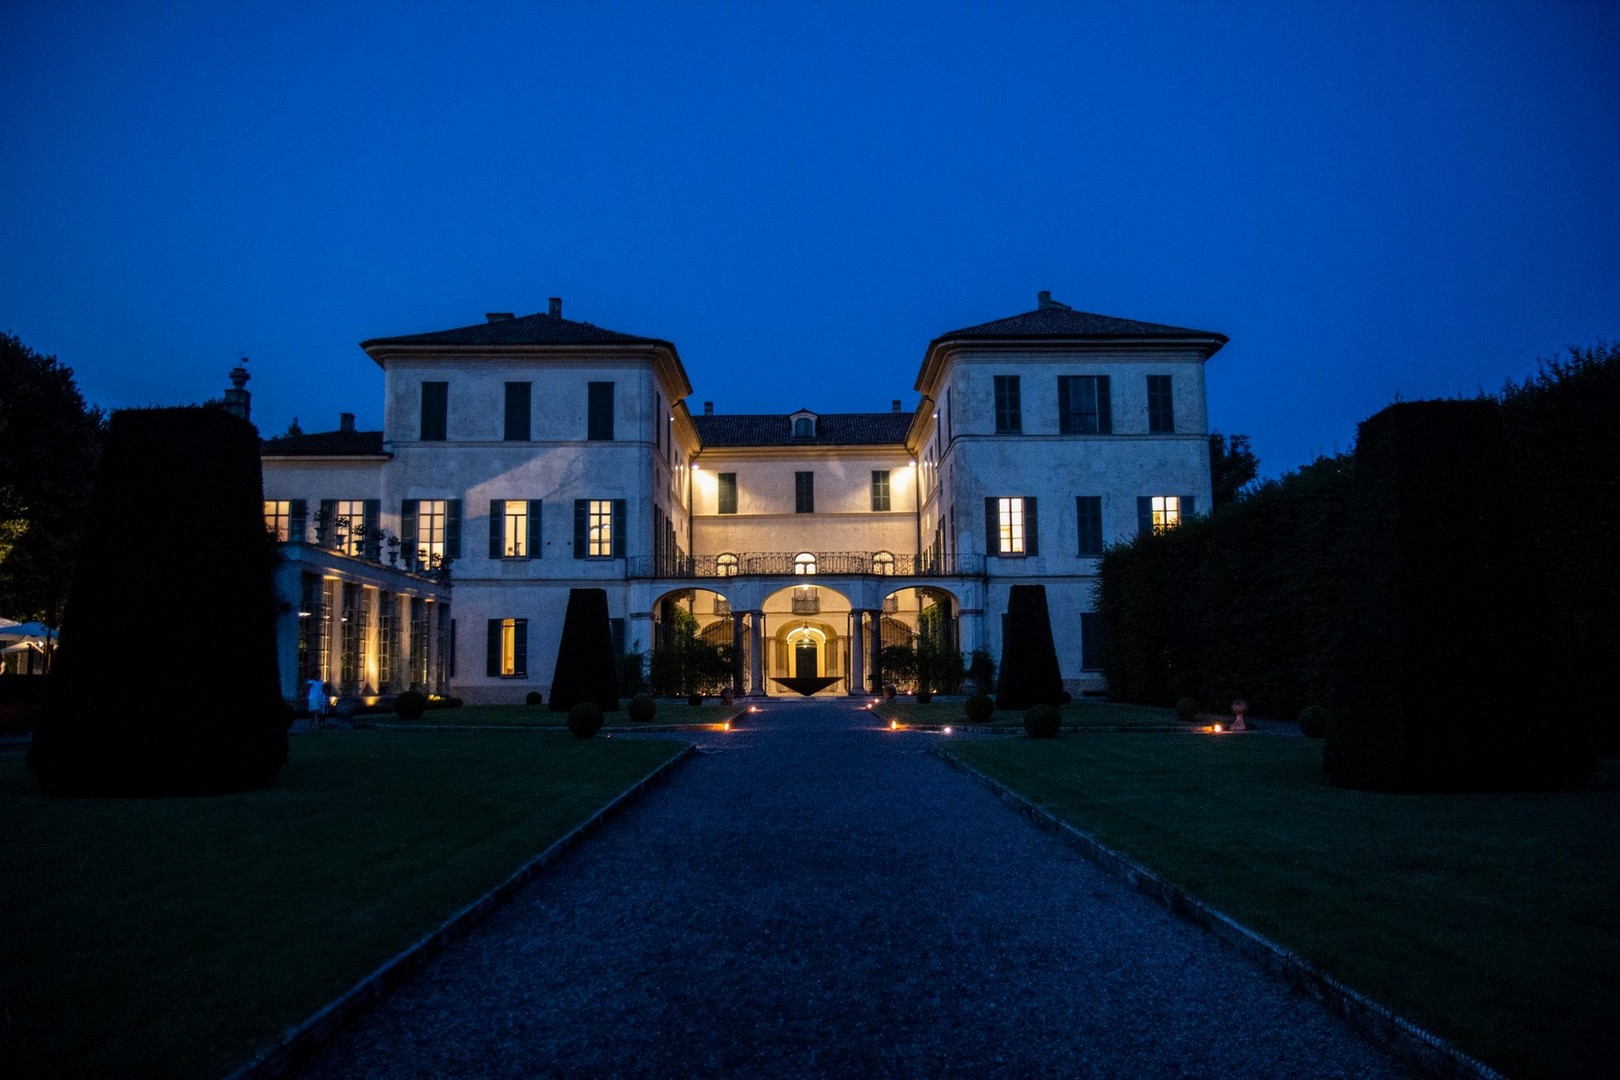 Sere d’estate a villa Panza di Varese